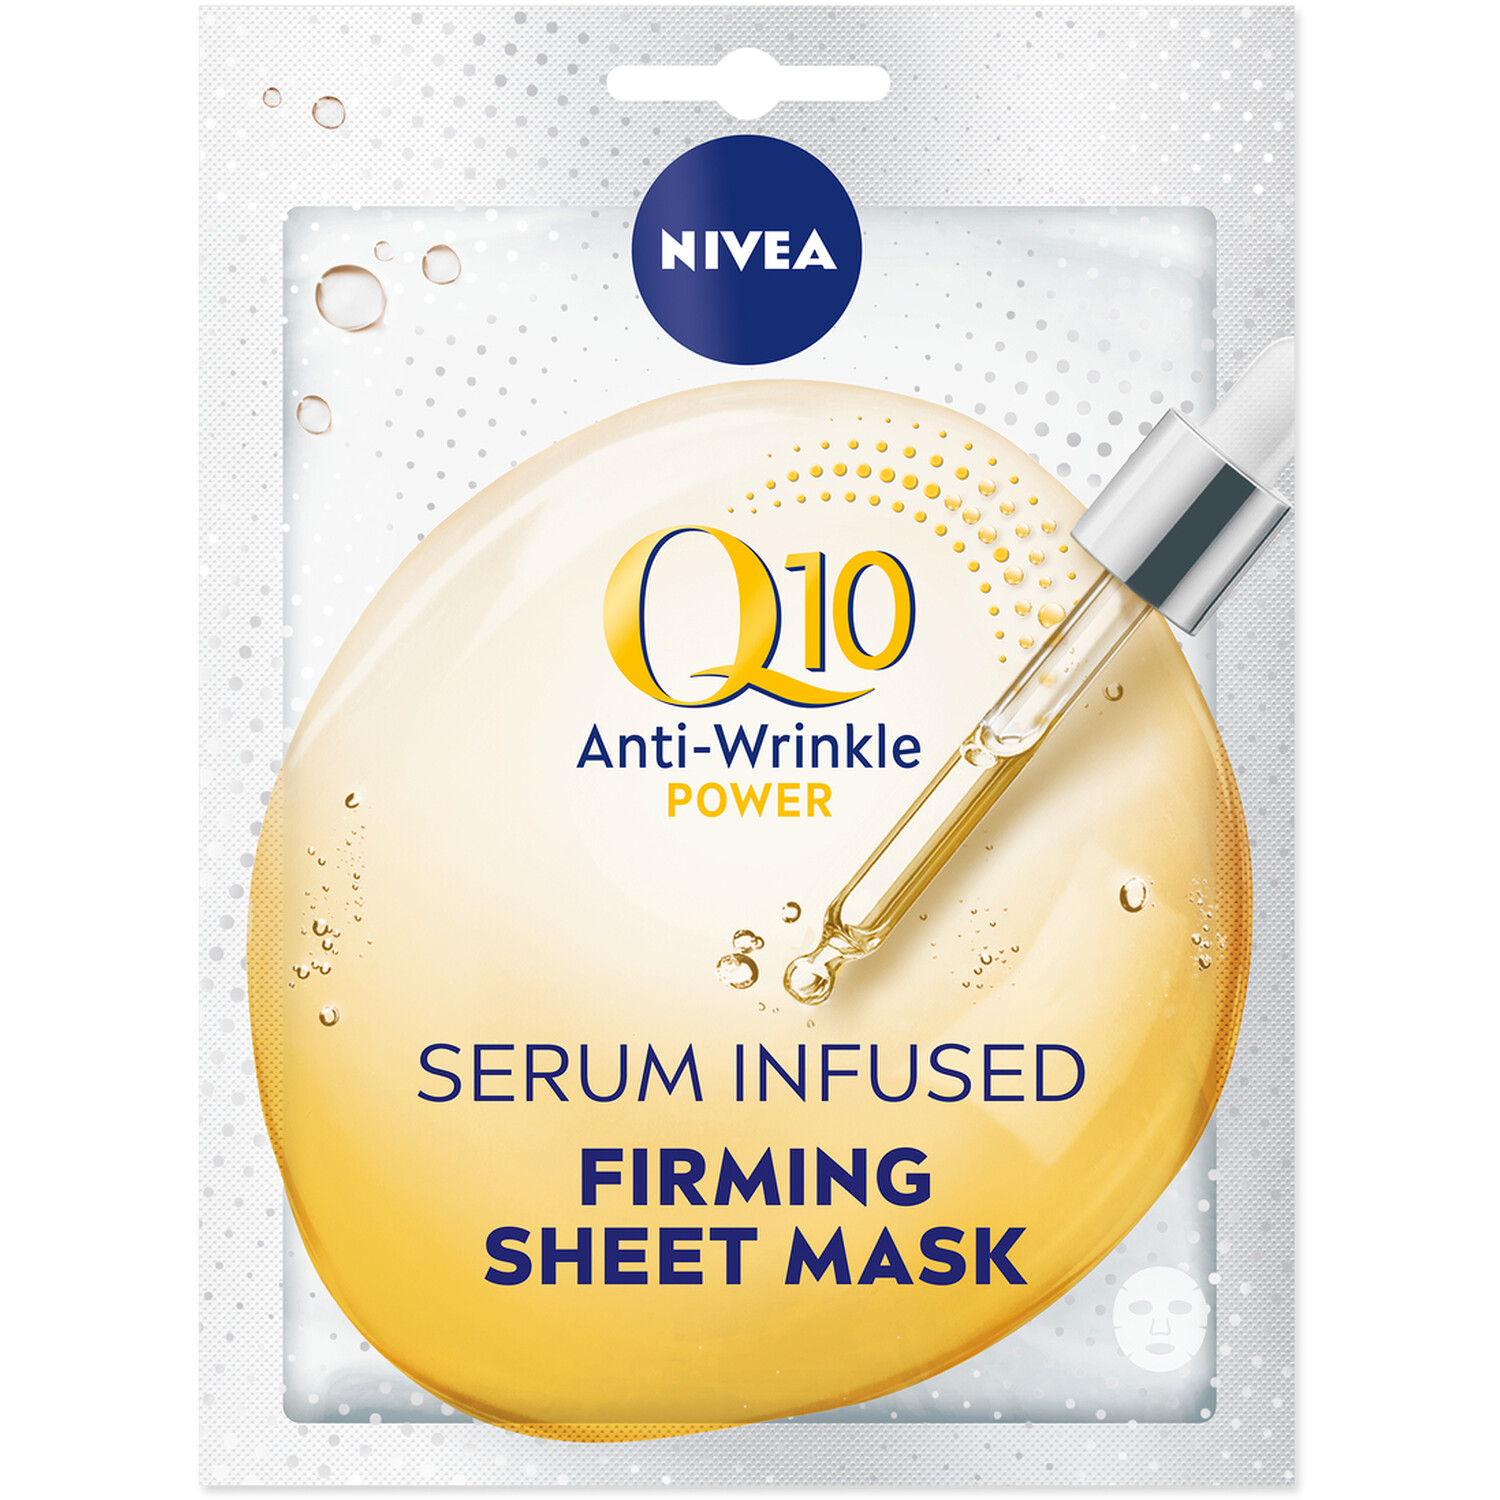 Nivea Q10 Anti-Wrinkle Power Serum Infused Firming Sheet Mask - White Image